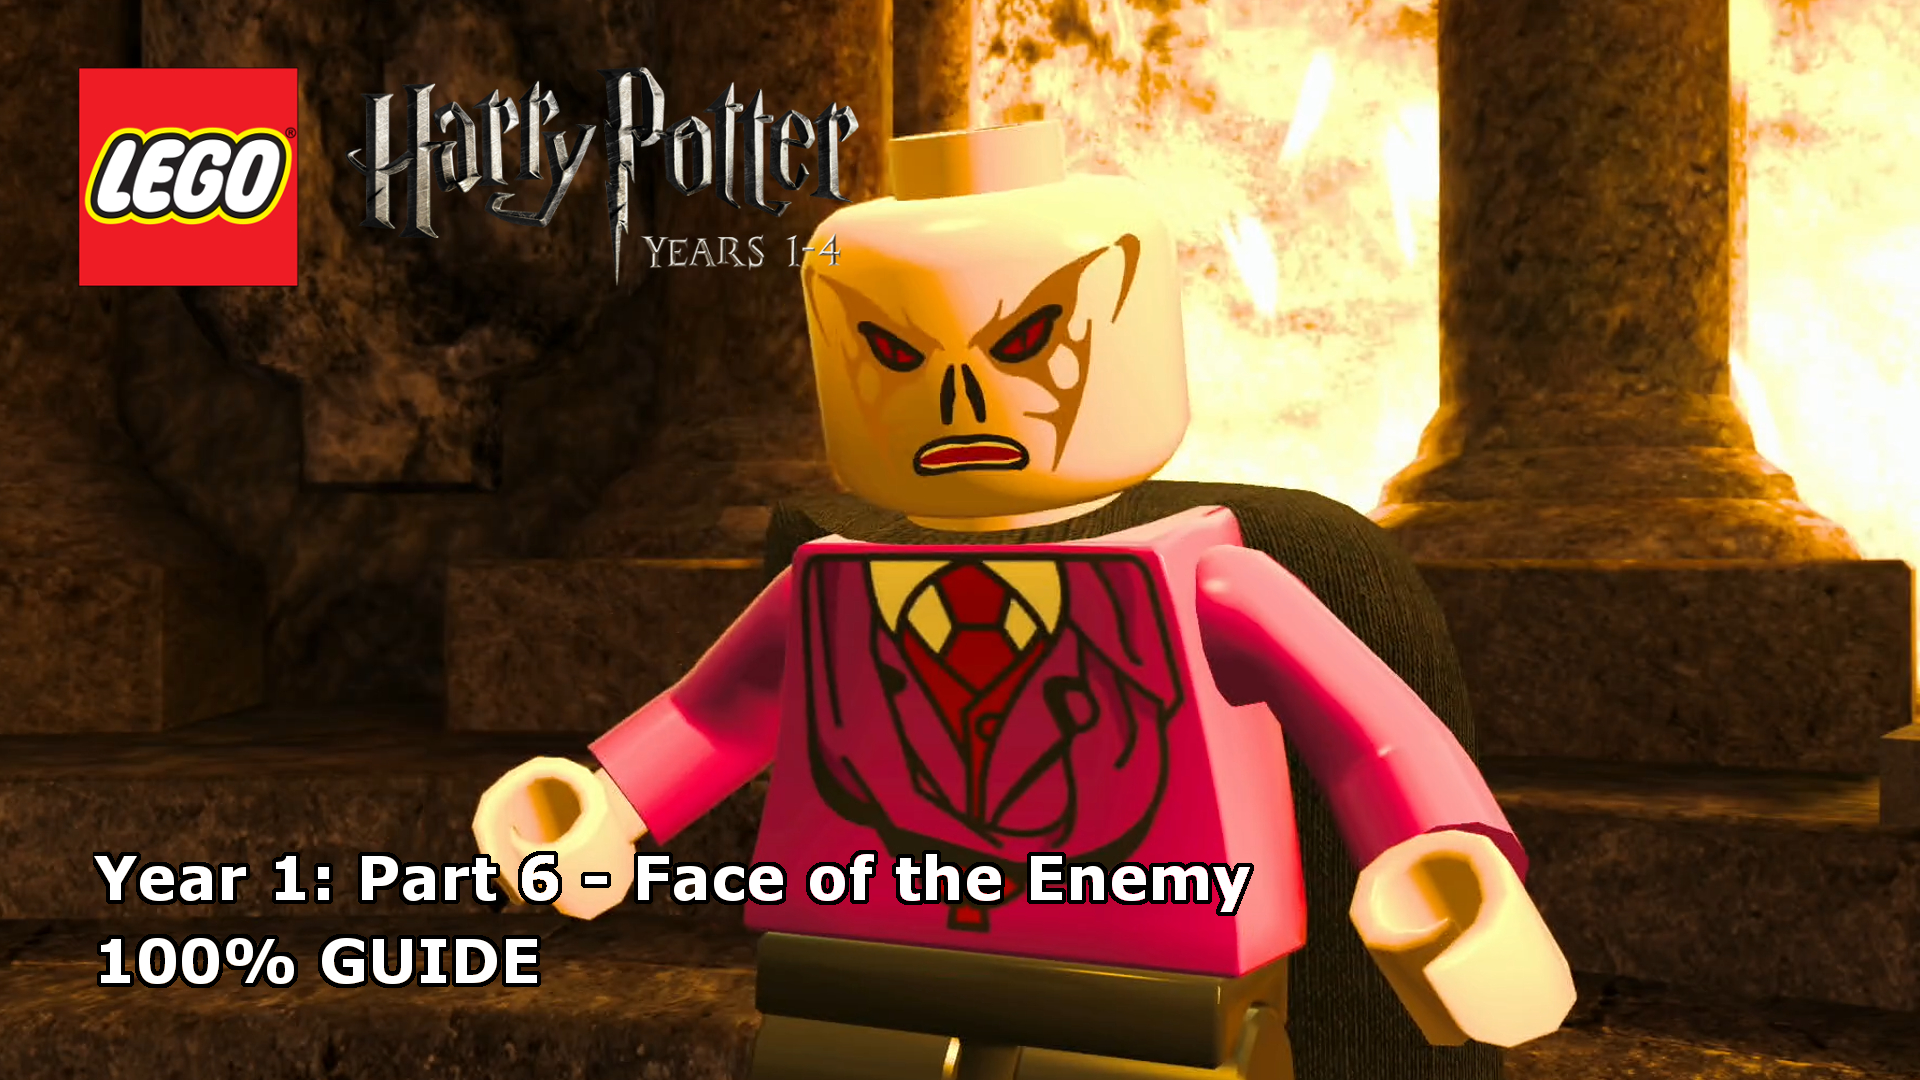 LEGO Harry Potter Years 1-4: Year 3 Part 1 - Walkthrough